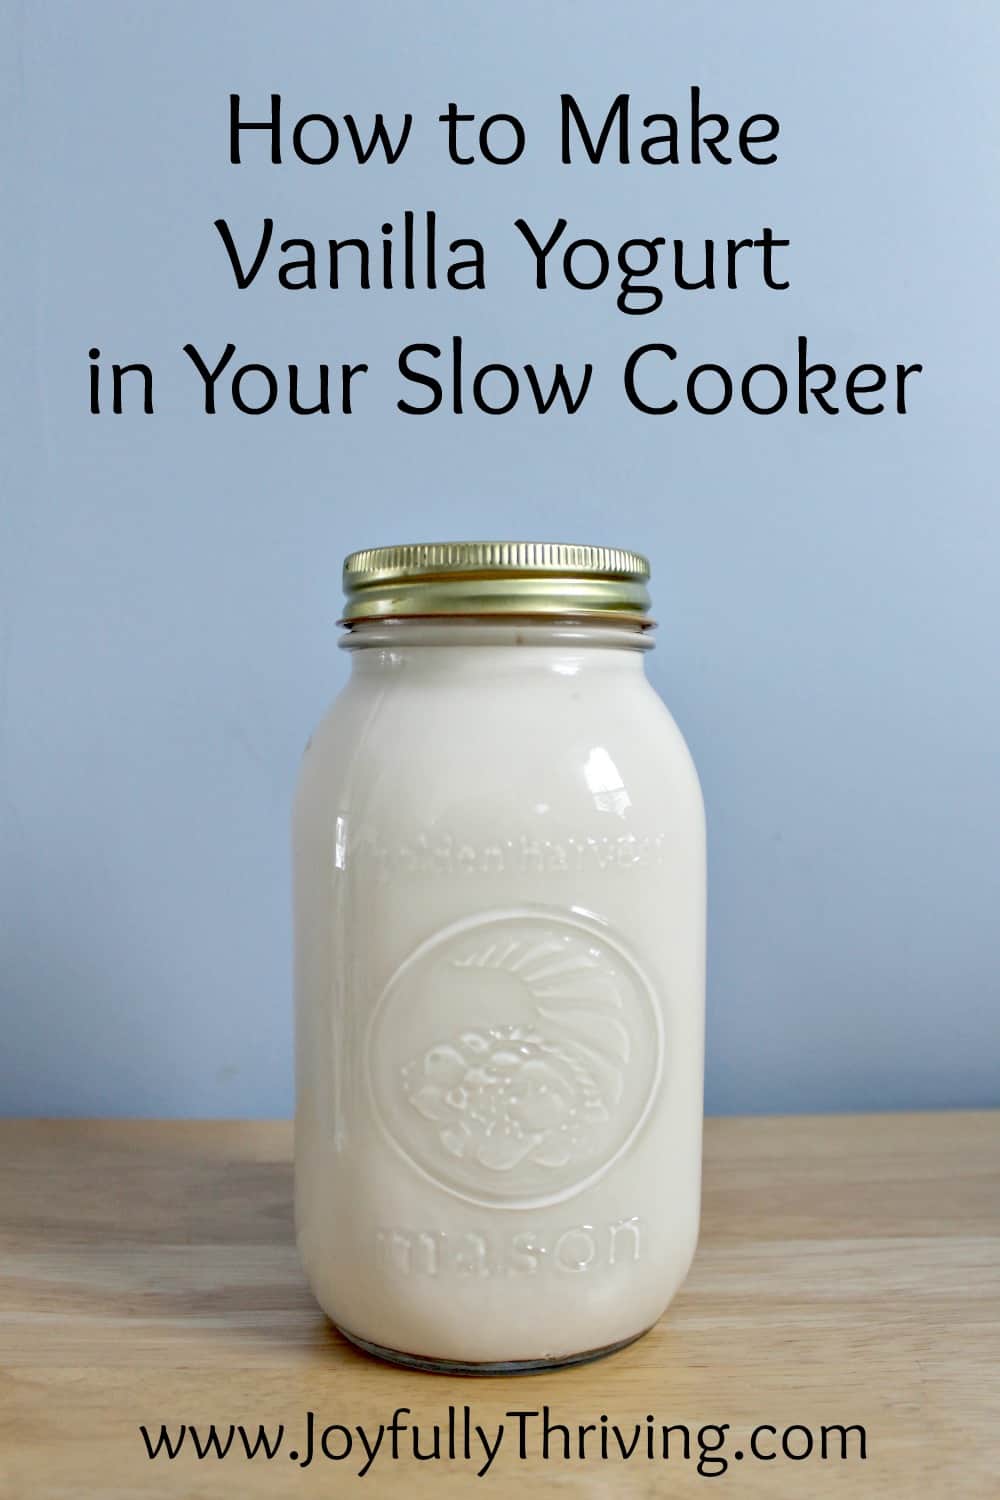 How to Make Vanilla Yogurt in a Crock Pot